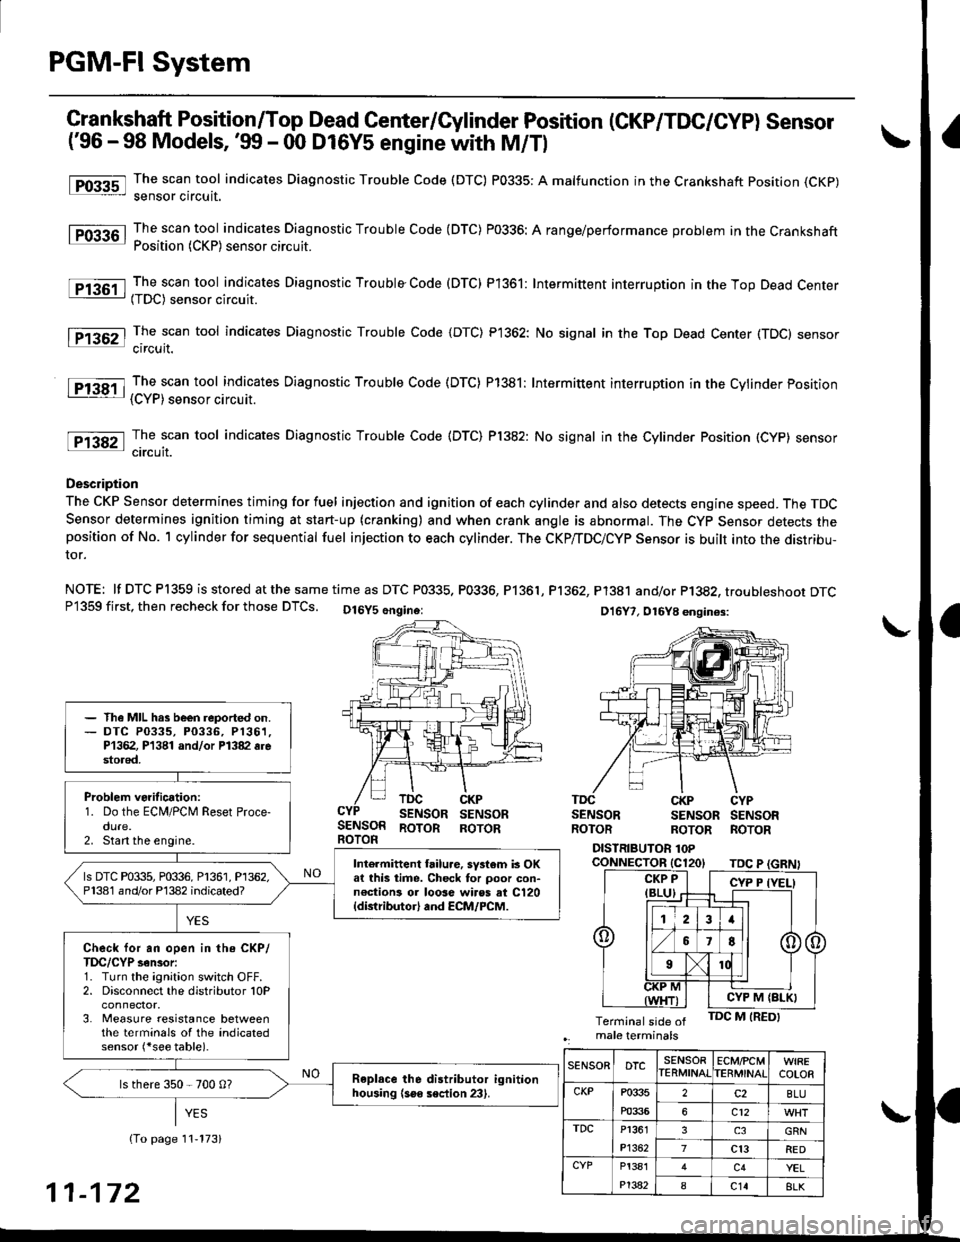 HONDA CIVIC 1997 6.G User Guide PGM-FI System
tFos3sl
tFffi6l
tPr361 I
fPfi62l
fFr38il
tF13s2-l
Crankshaft Position/Top Dead Genter/Gylinder Position (CKP/TDC/CYP) Sensor
(96 - 98 Models, !n - 00 D16Y5 engine with M/Tl
The scan to